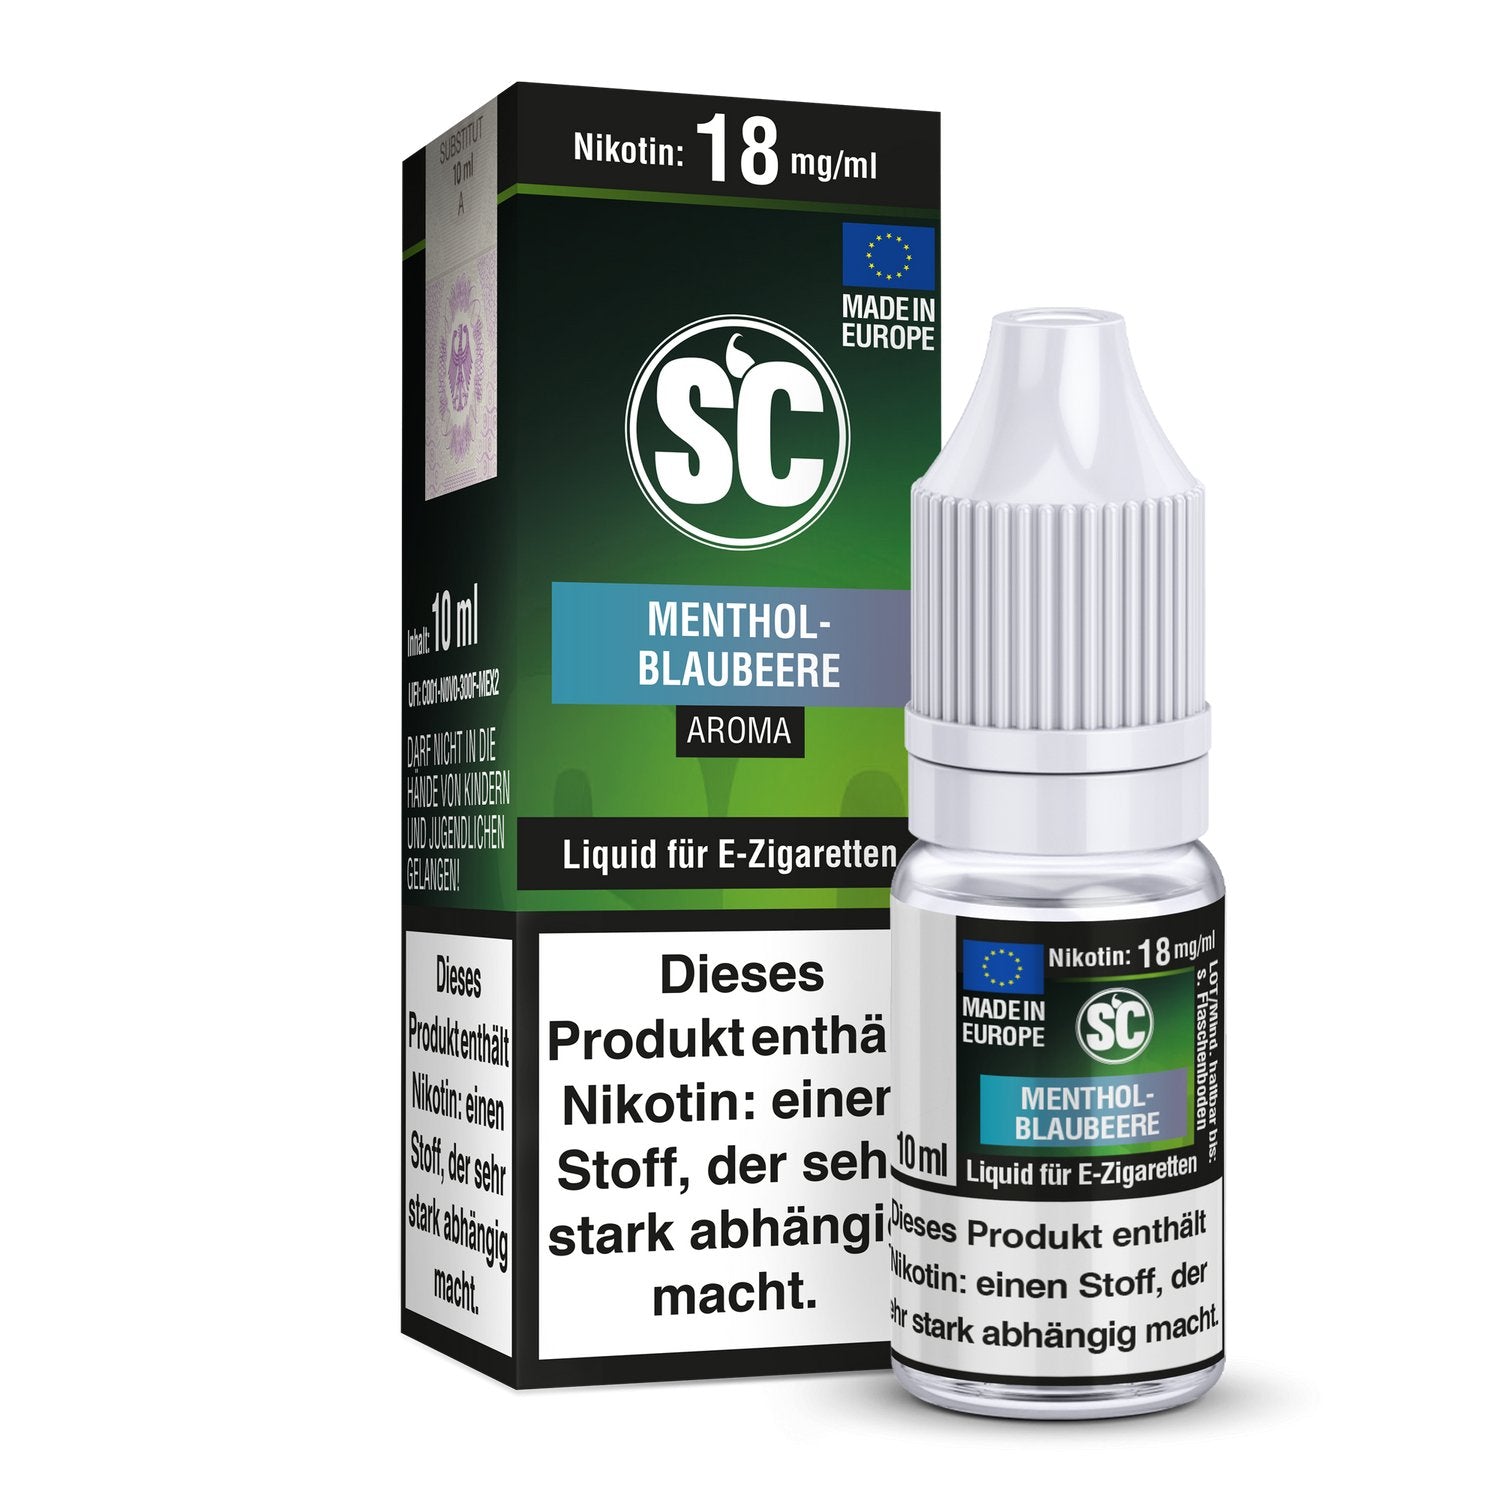 SC - Menthol-Blaubeere - 10ml Fertigliquid (Nikotinfrei/Nikotin) - 1er Packung 0 mg/ml - Vapes4you